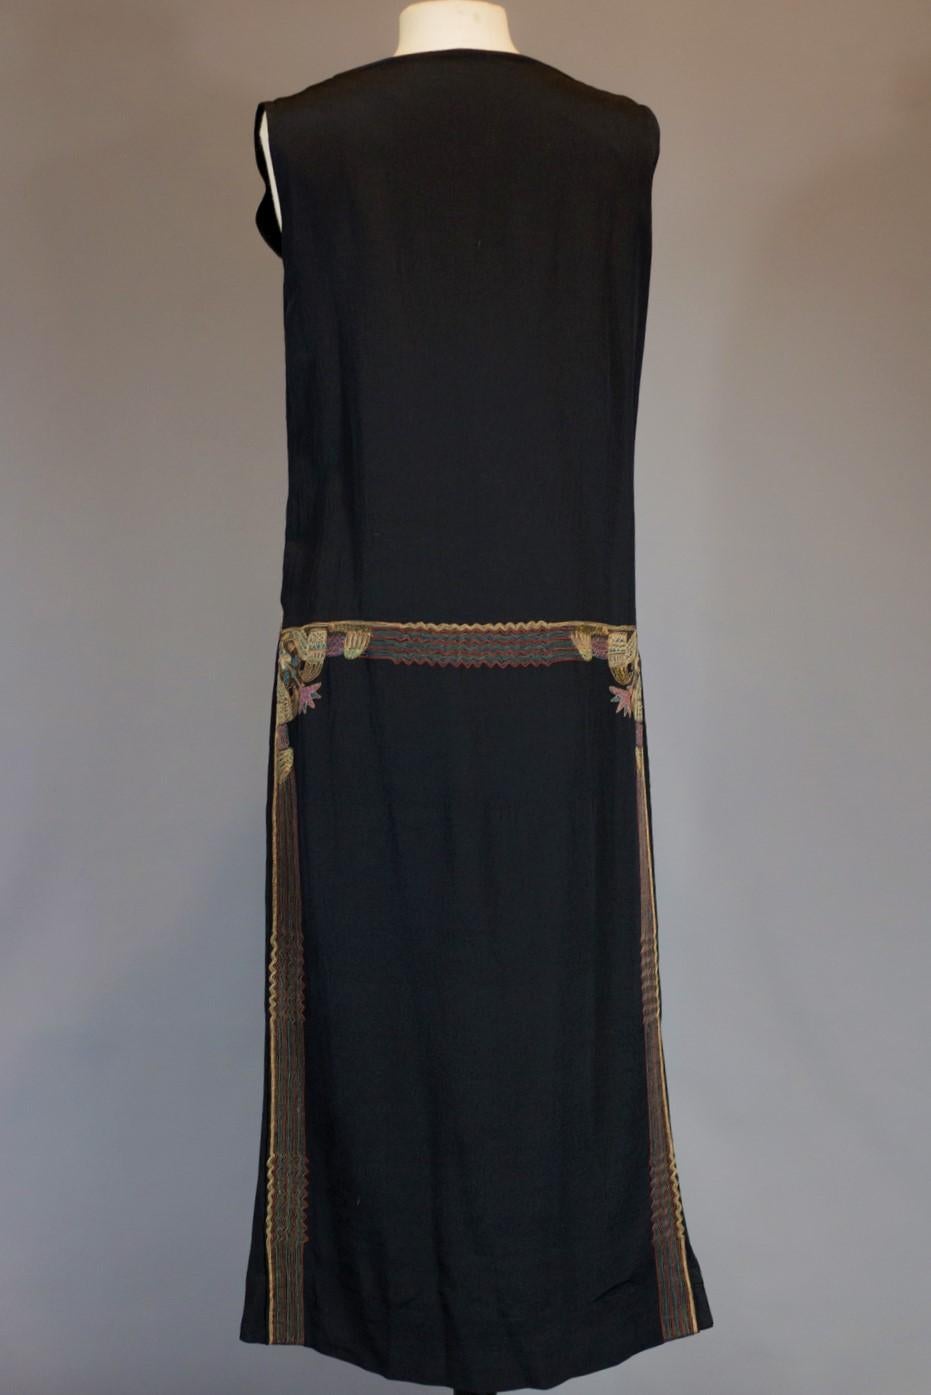 A French Egyptomania Dress In Embroidered Black Crepe silk- Circa 1930 For Sale 7